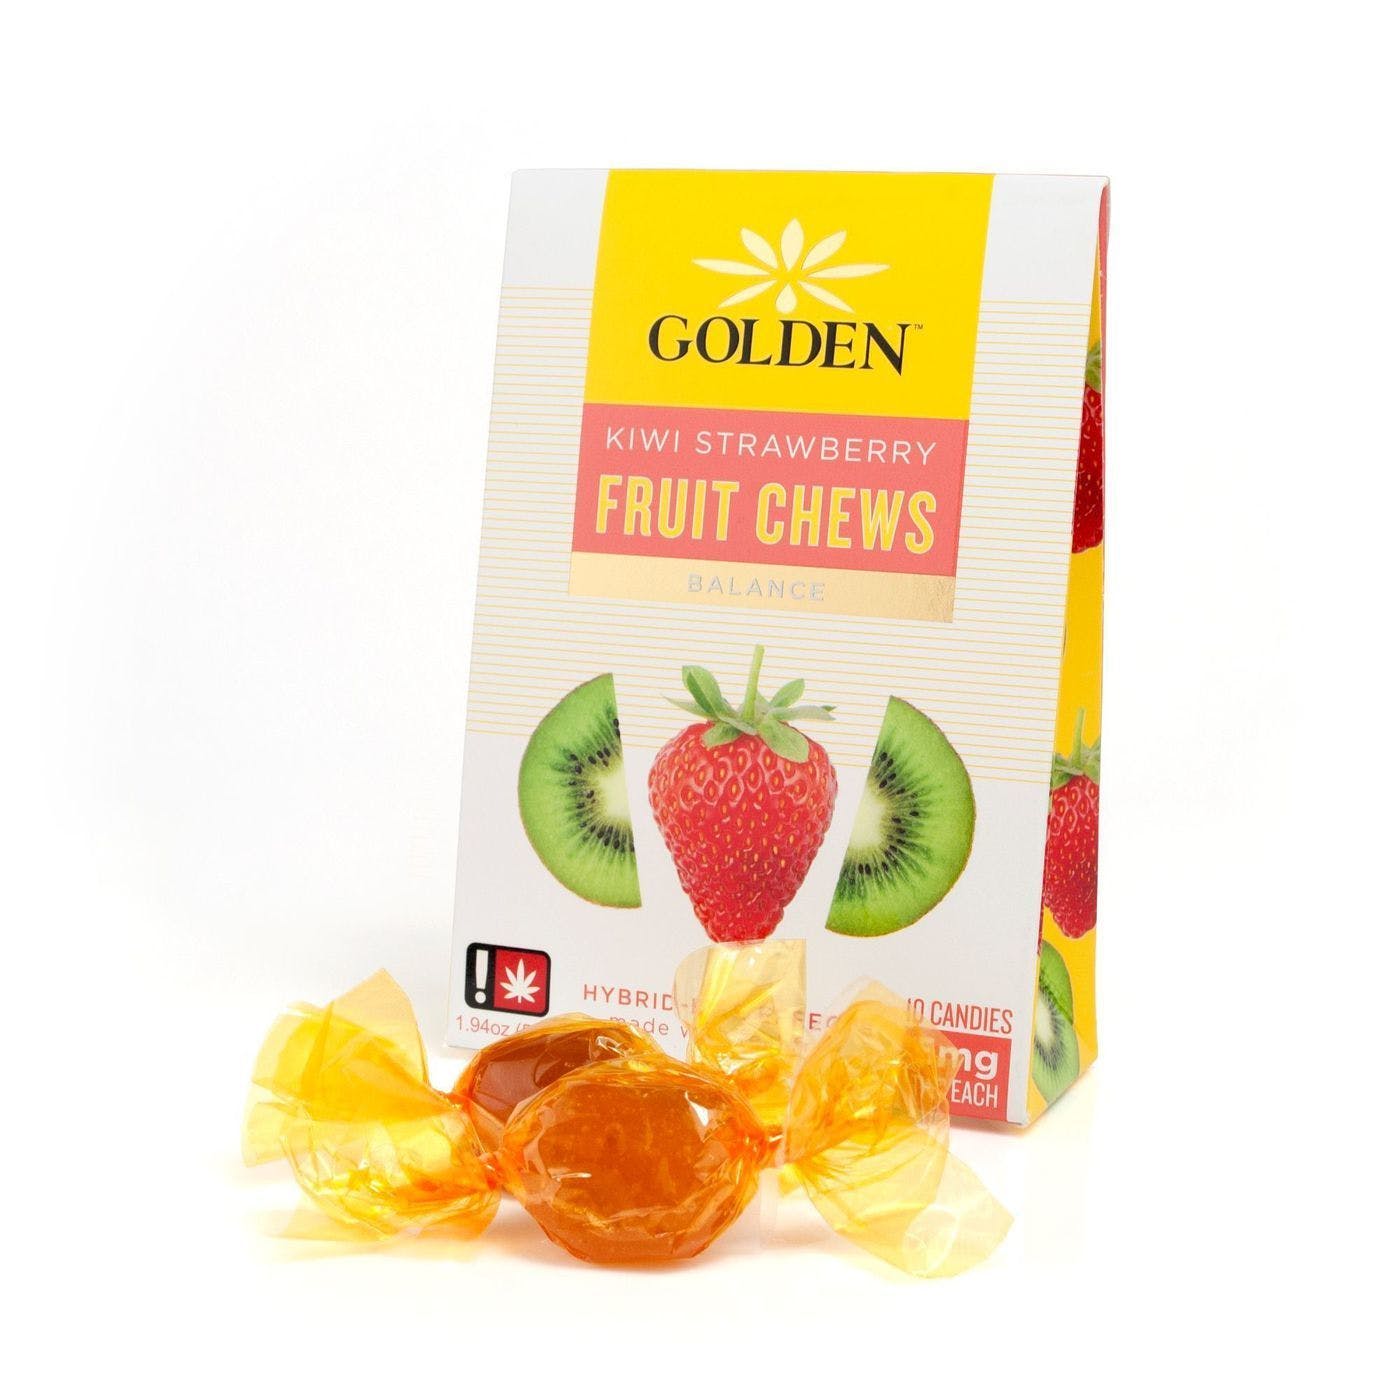 Golden Fruit Chews: Kiwi Strawberry